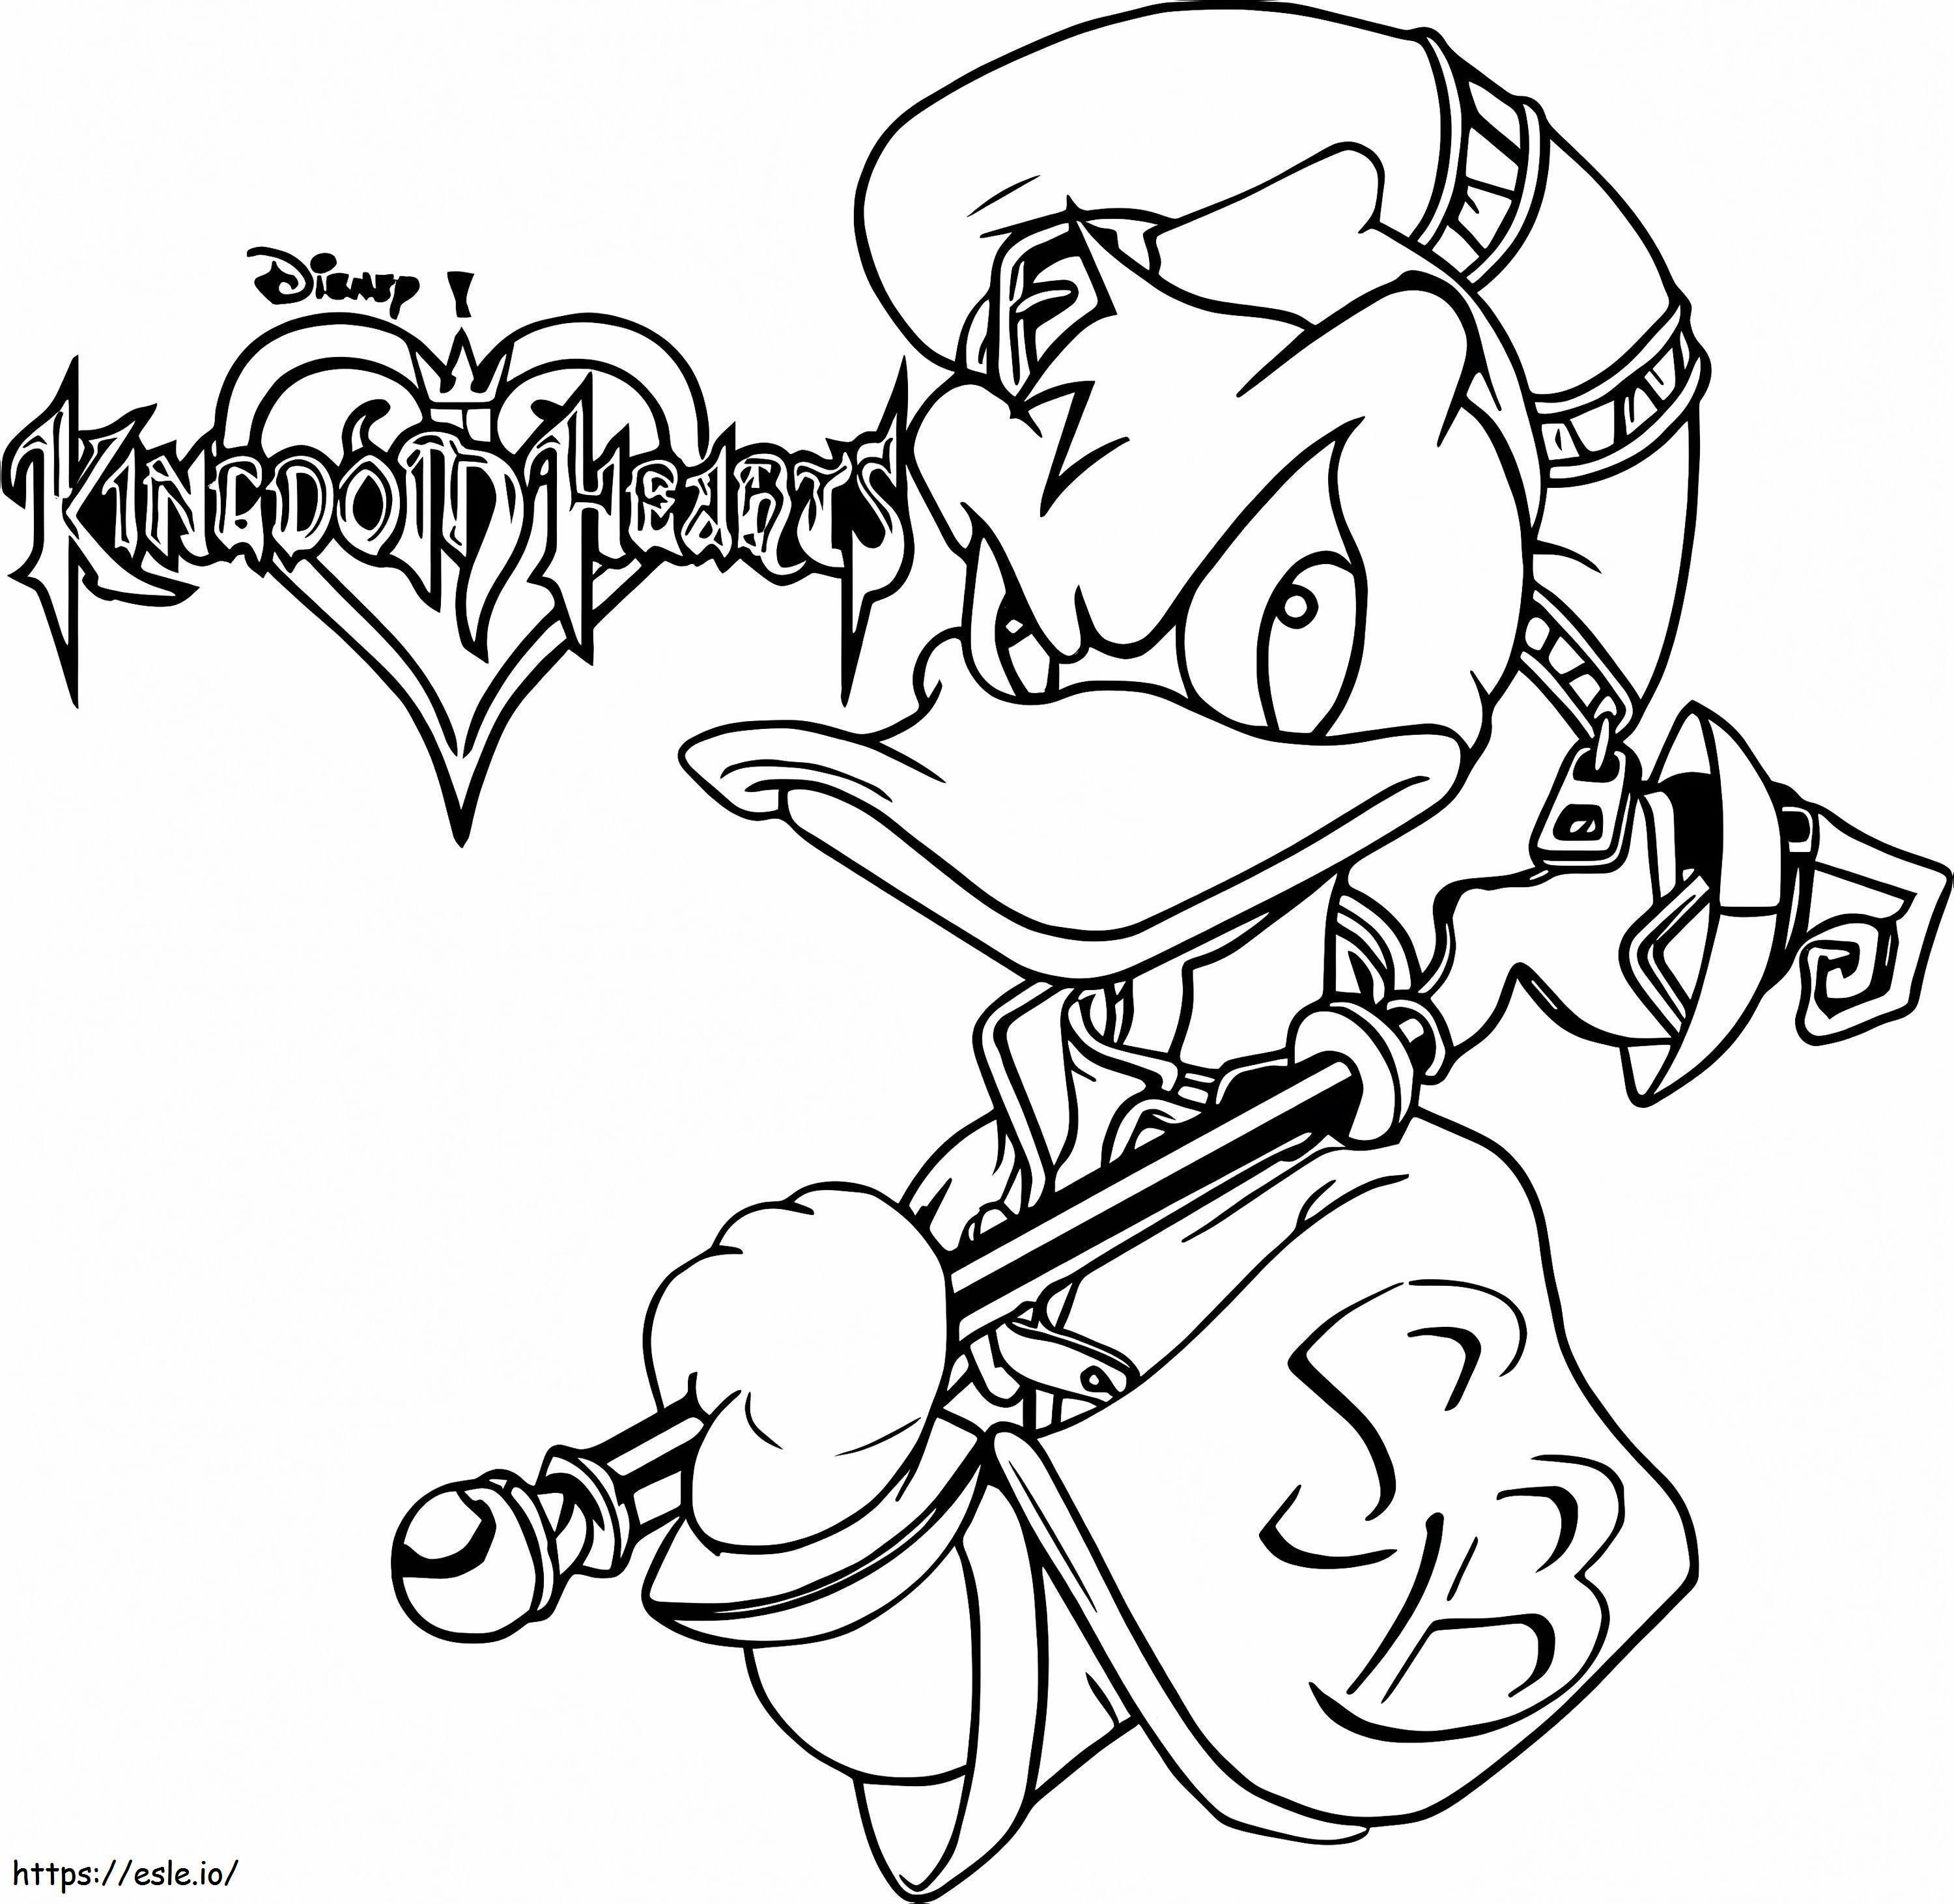 Coloriage Donlad Duck de Kingdom Hearts à imprimer dessin